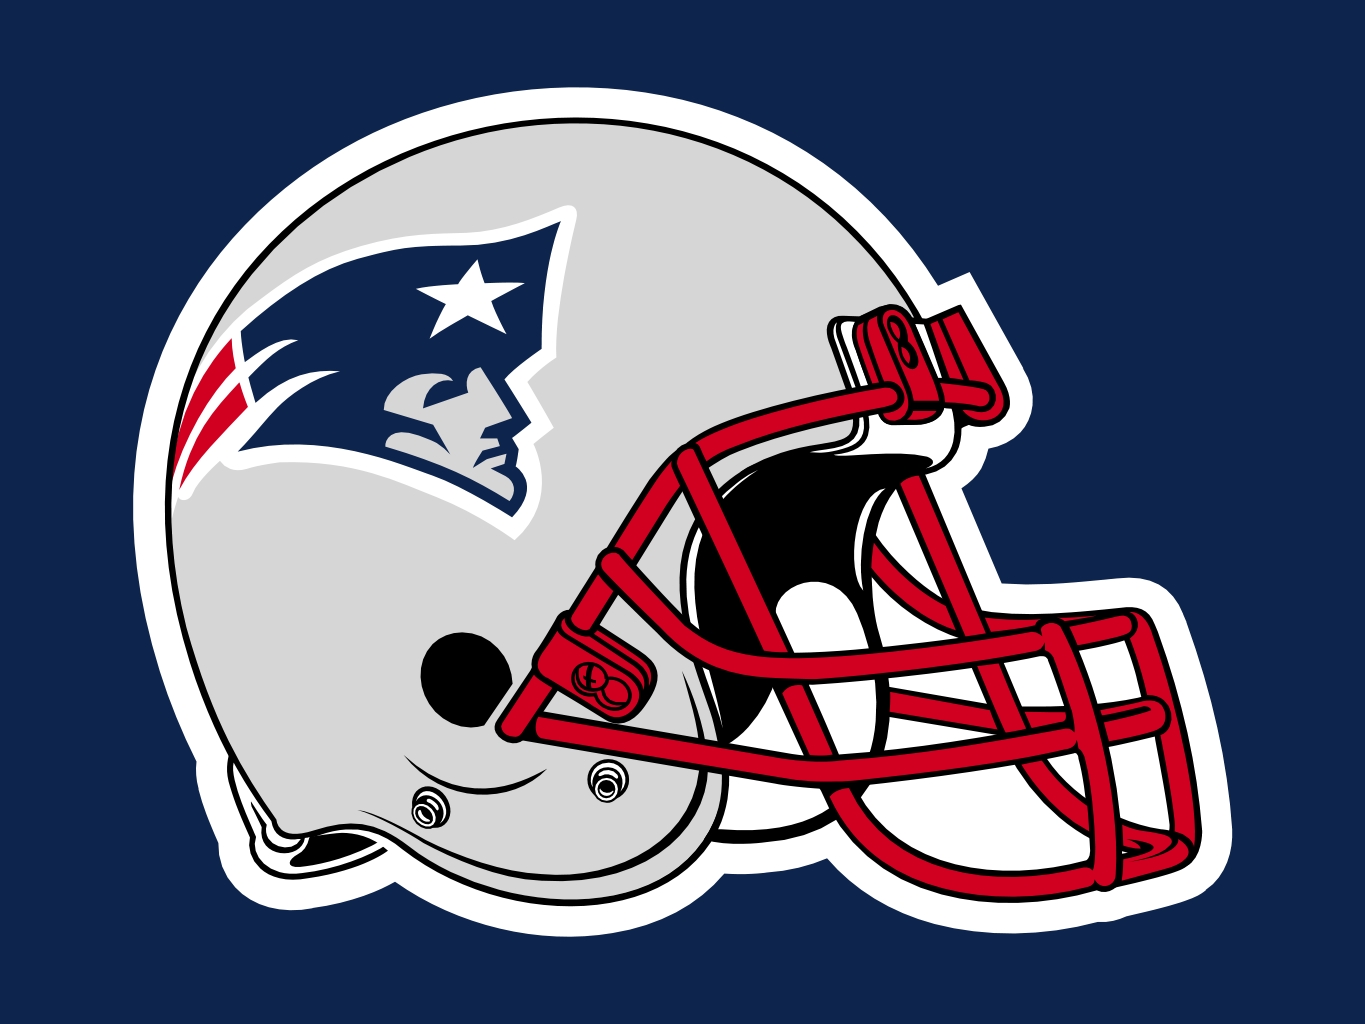 New England Patriots 2 - Super Bowl 52 Betting - Can Pats' Brady Exploit Eagles' Pass D?